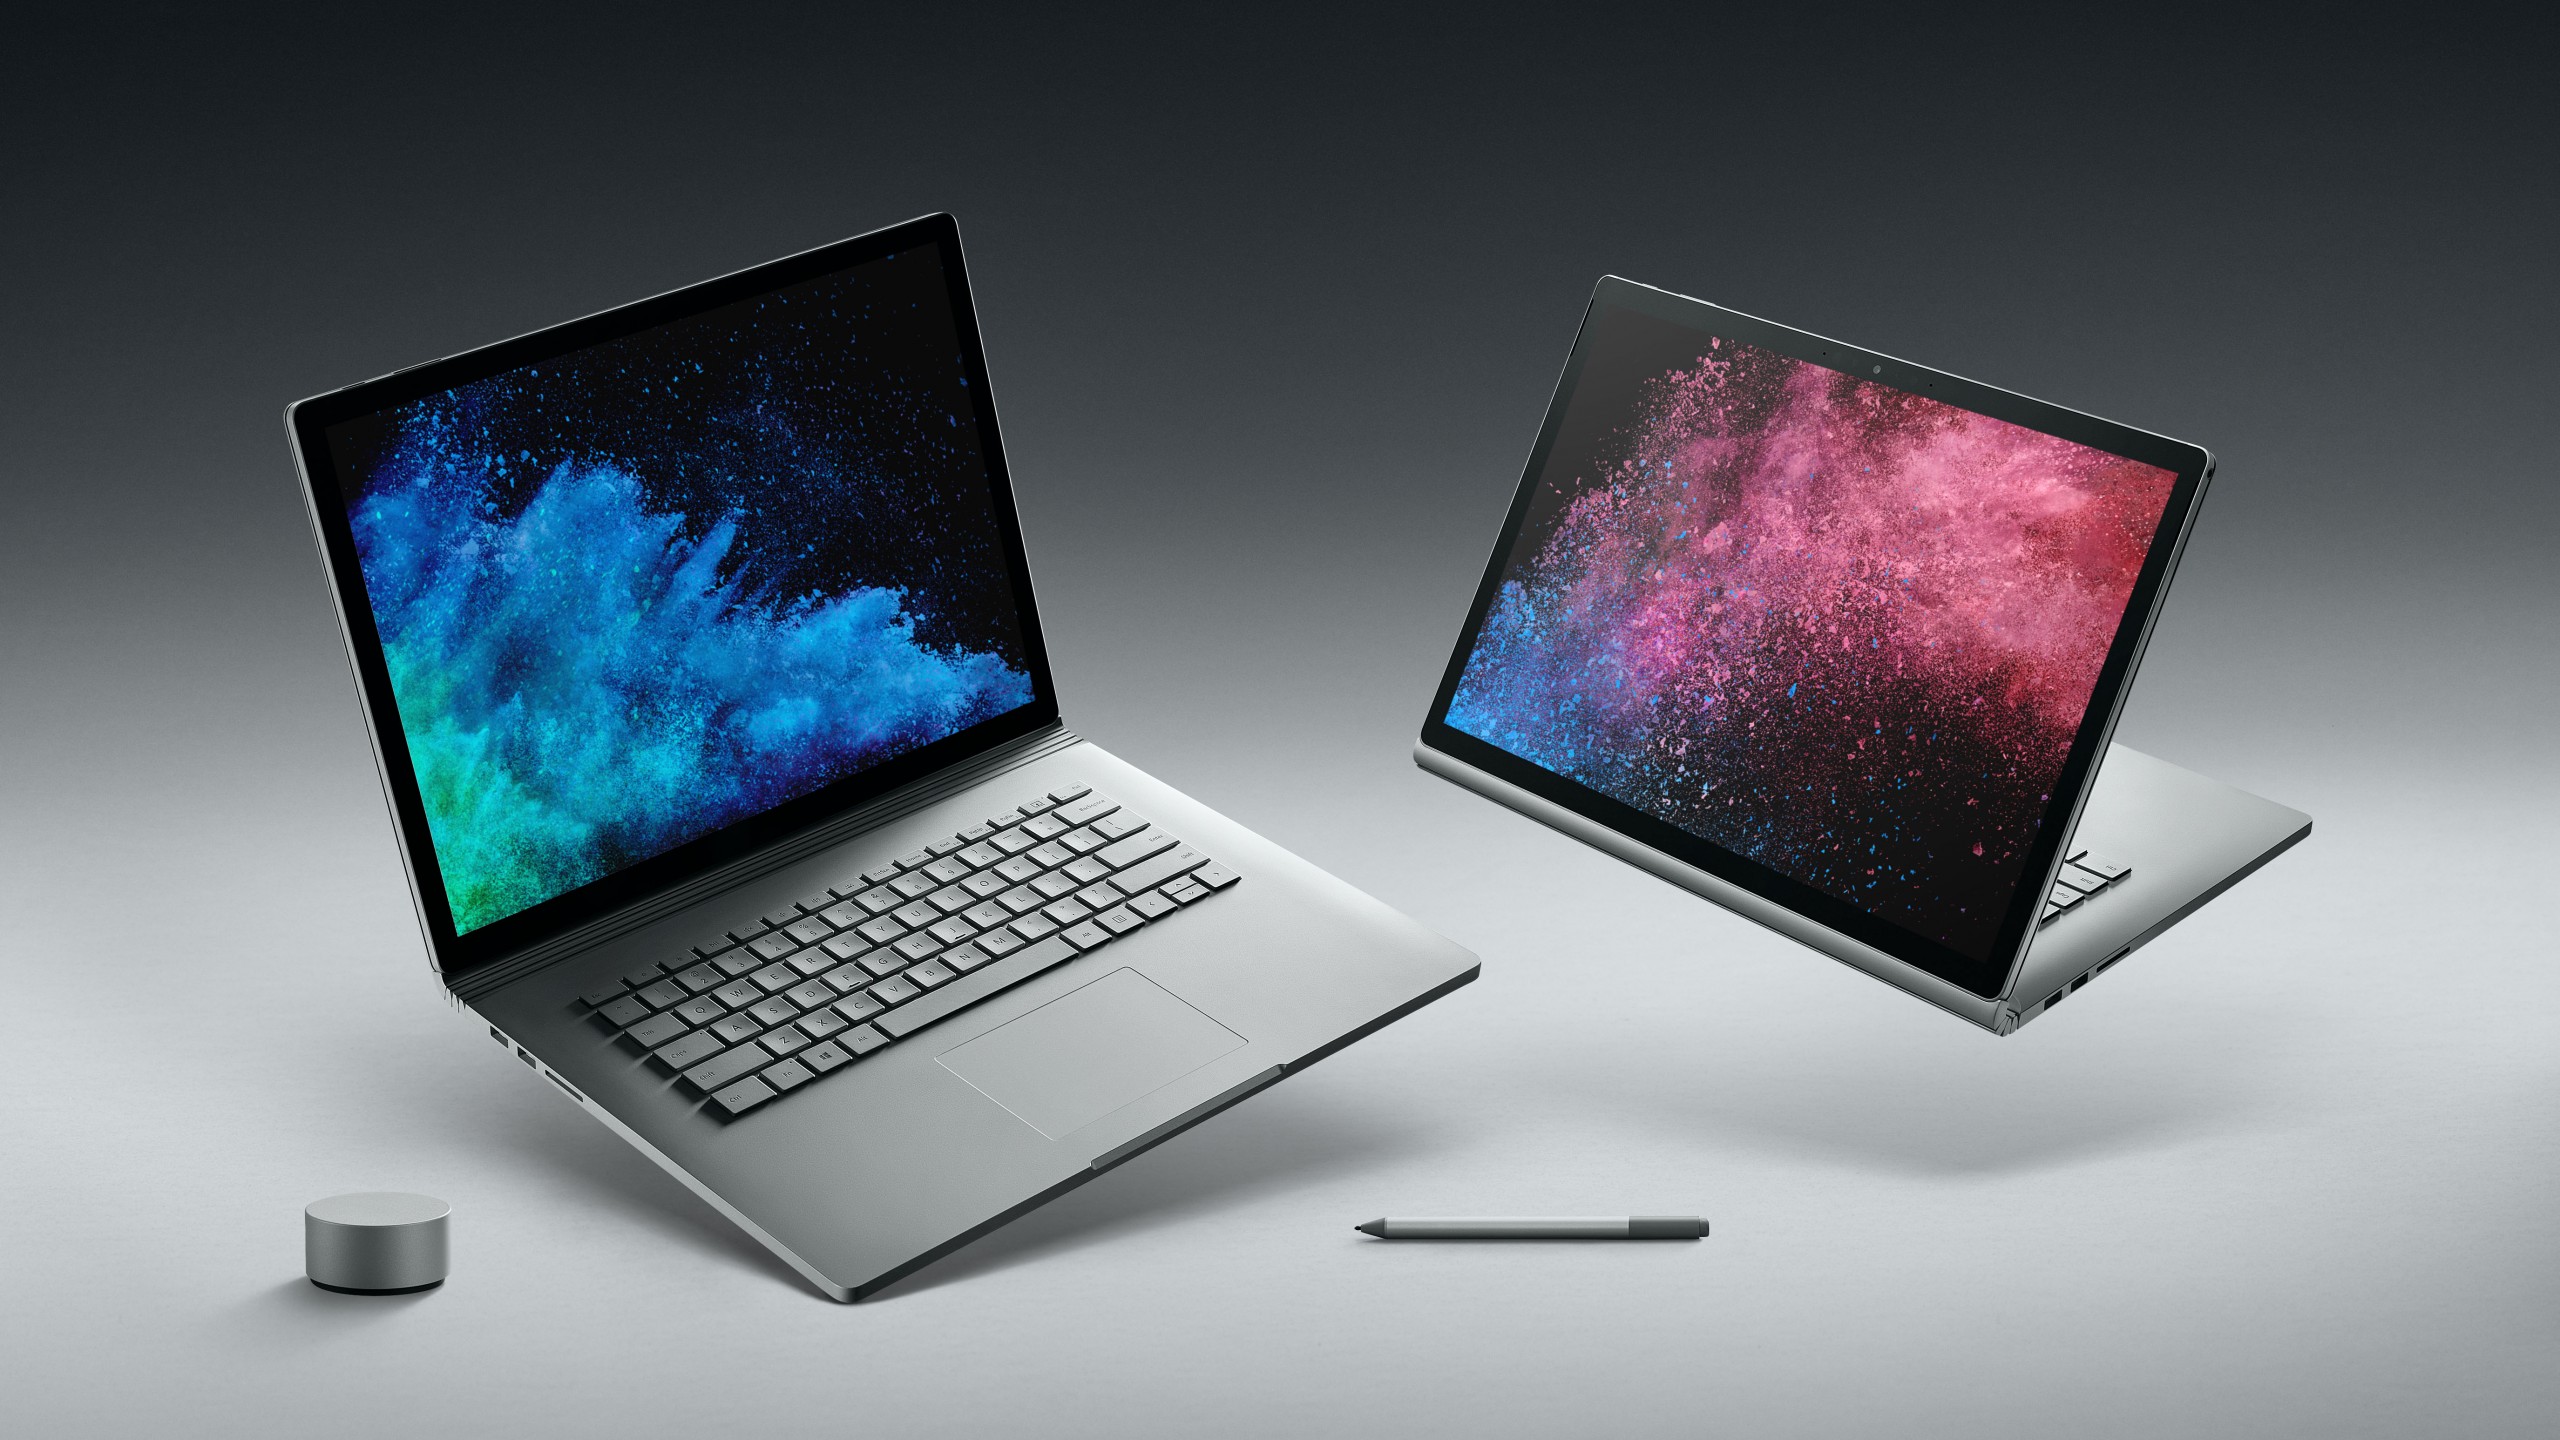 مايكروسوفت تخطط لإطلاق Surface Book 3 و Surface Go 2